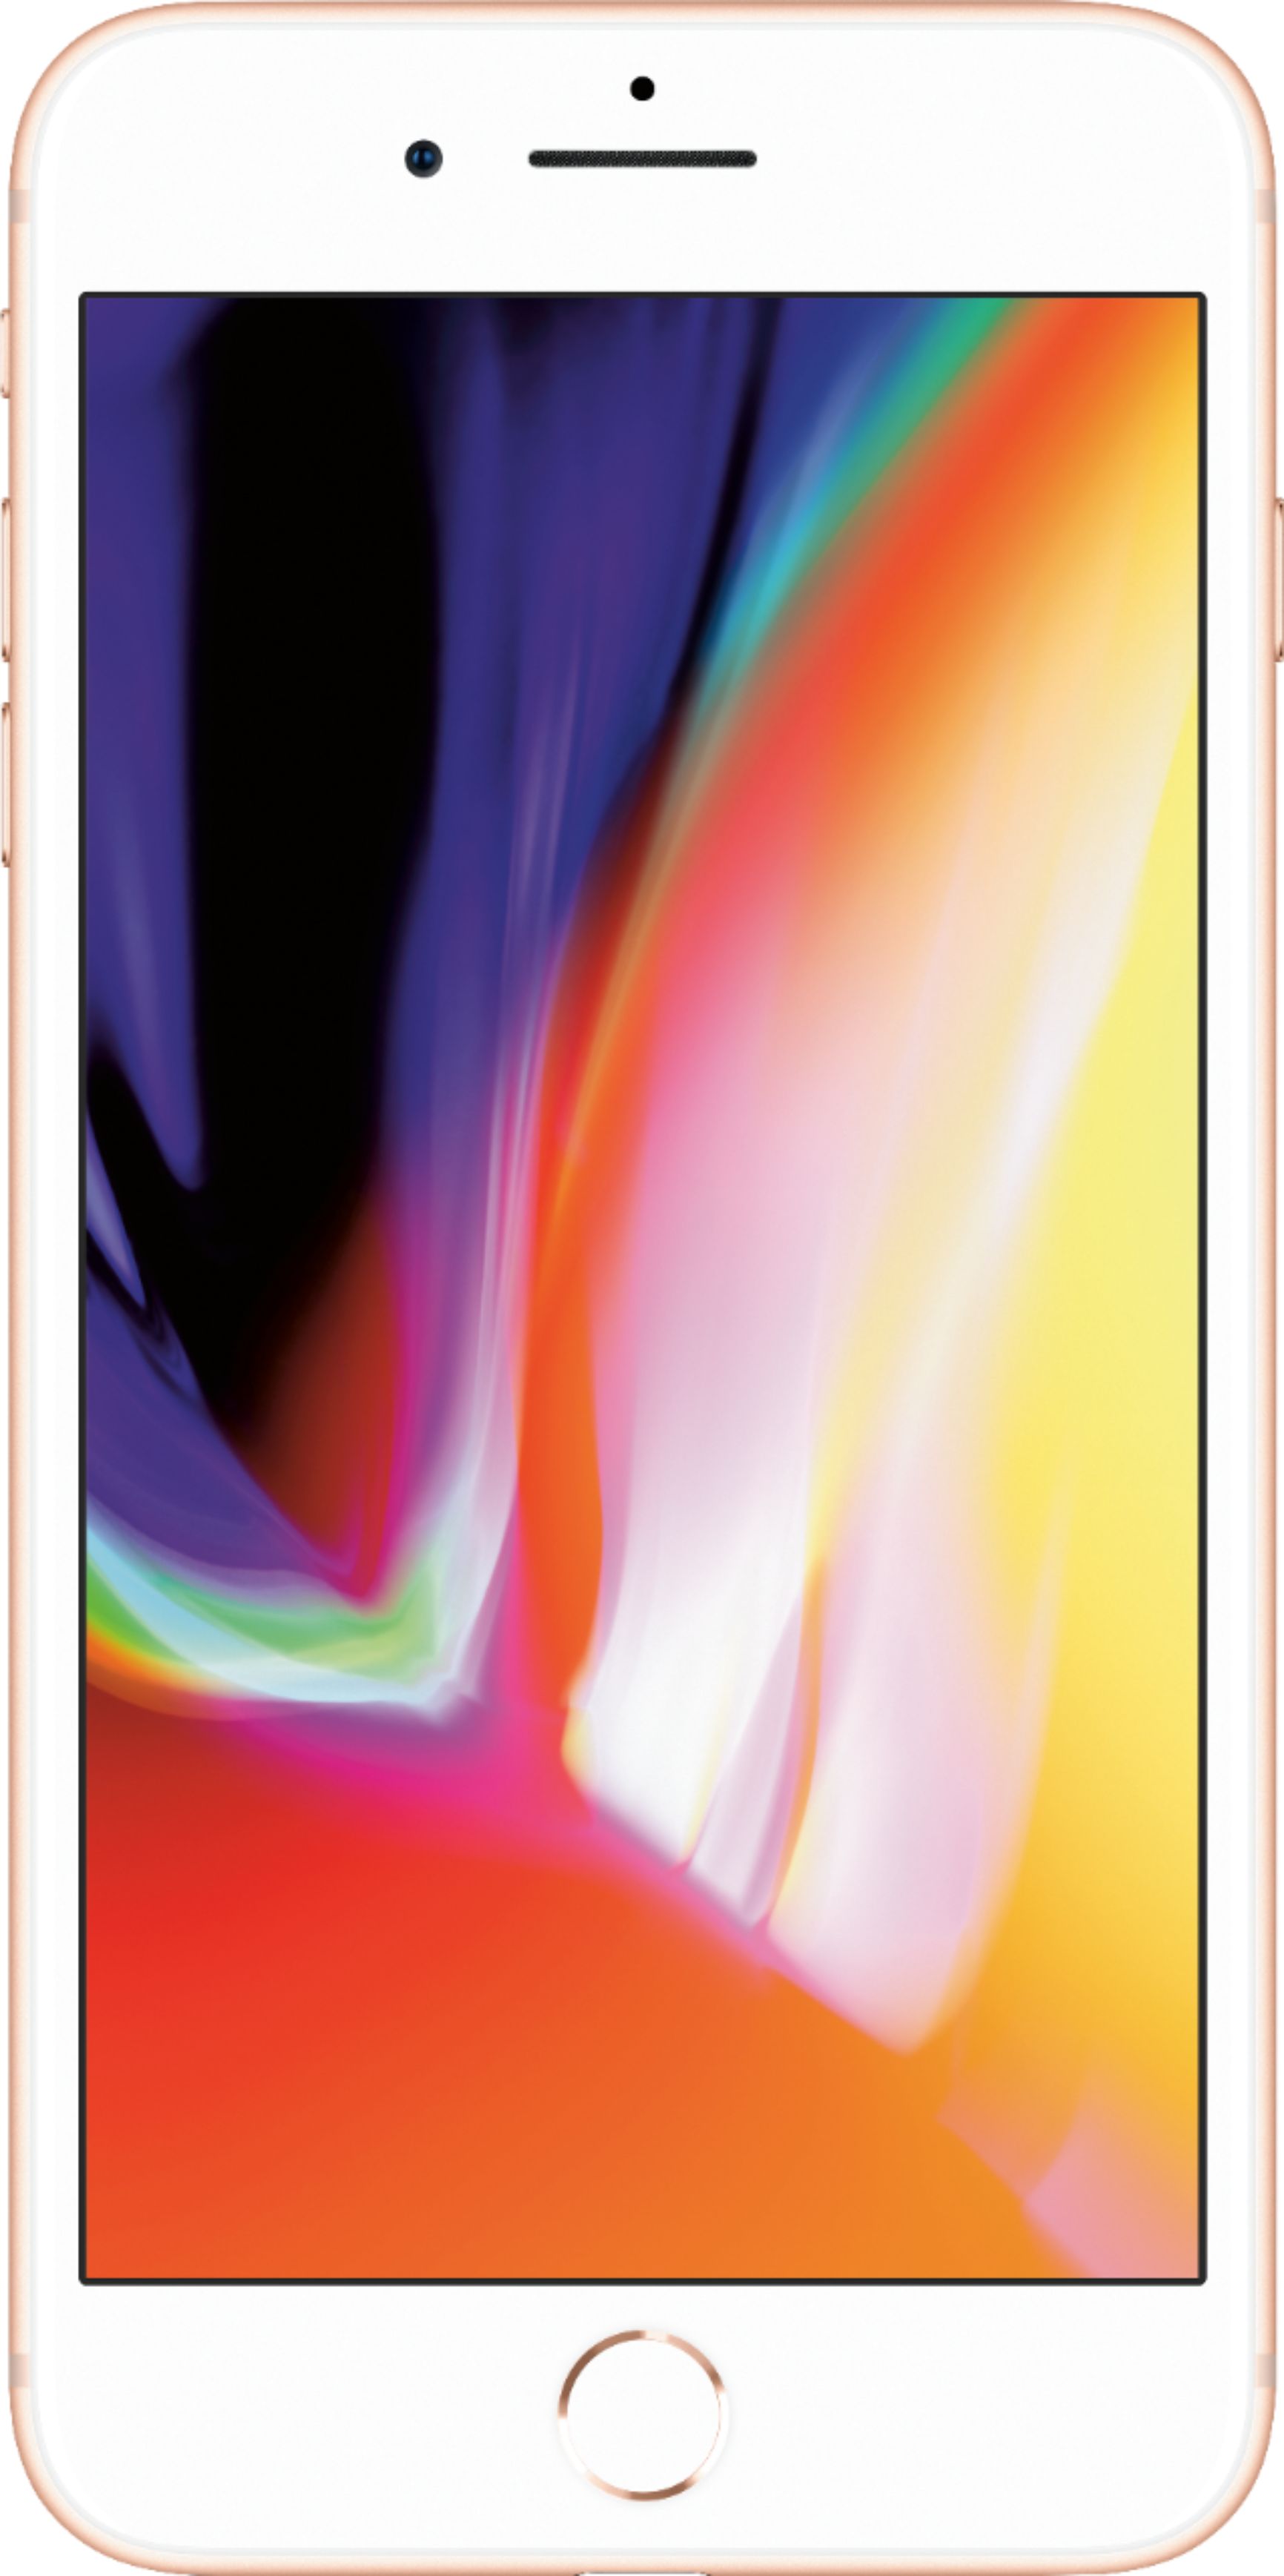 Apple - iPhone 8 Plus 128GB - Gold (AT&T)